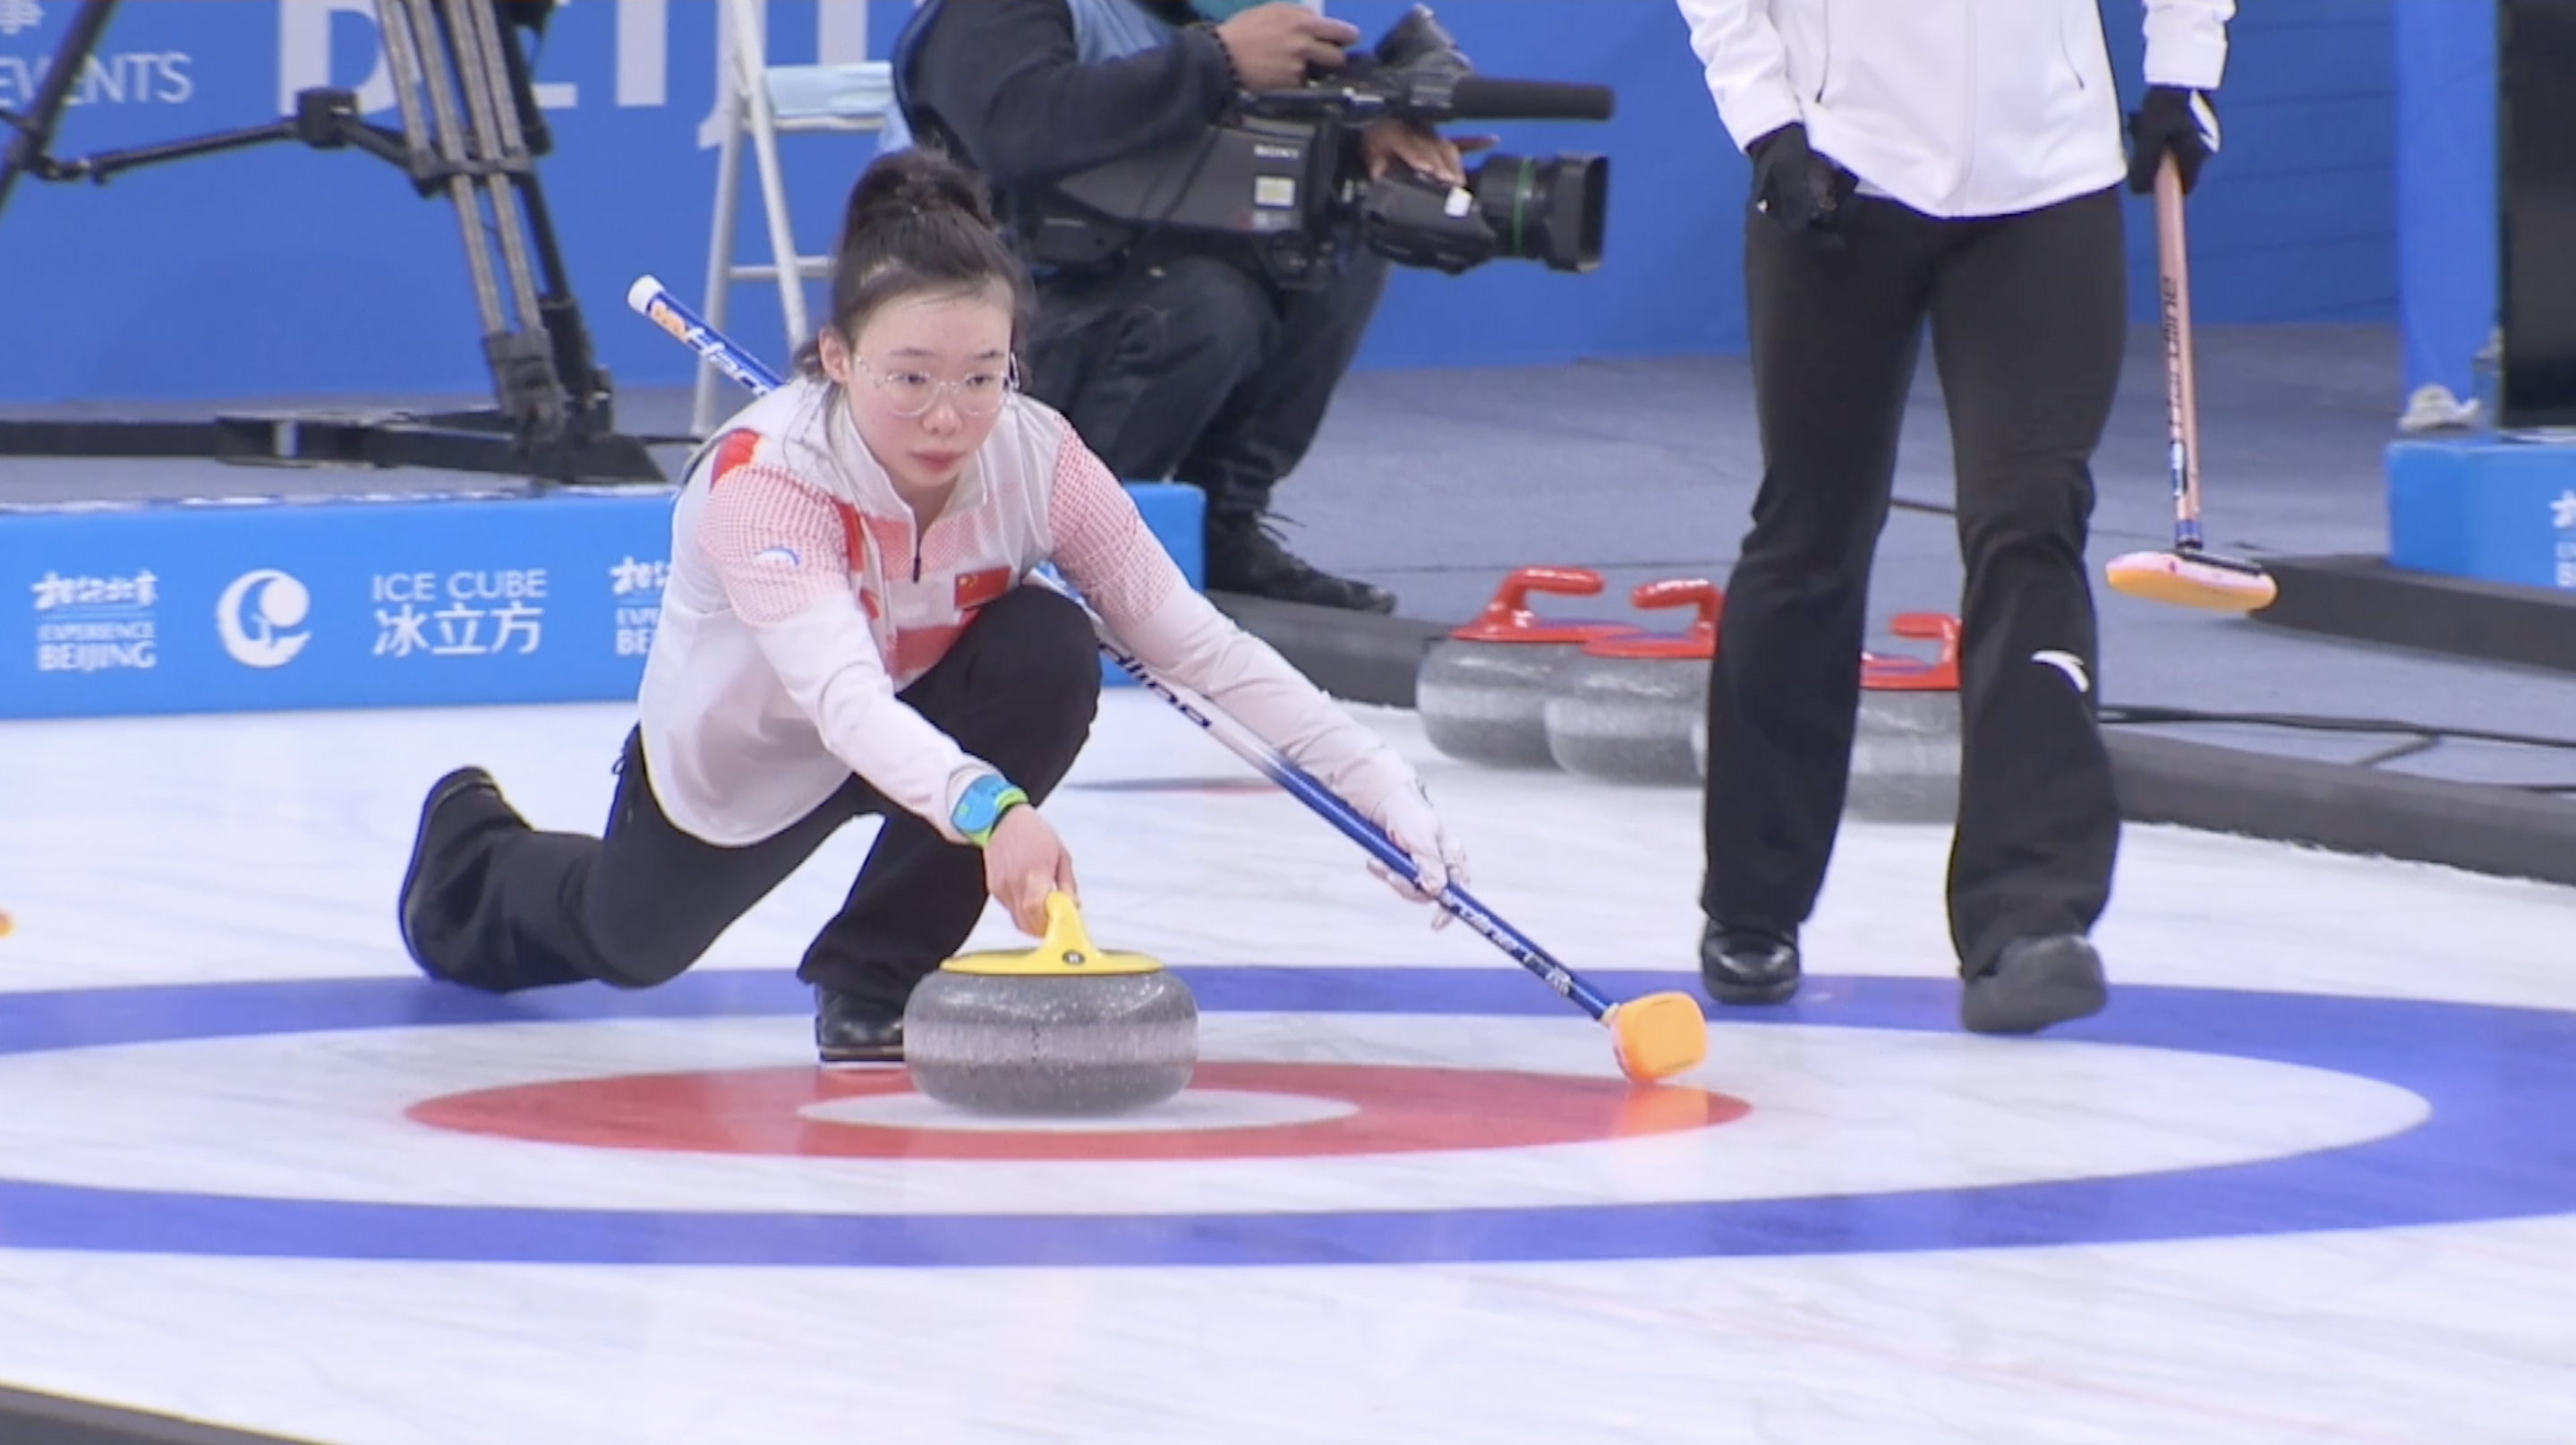 2022 Winter Olympic curling tests underway in Beijings Ice Cube